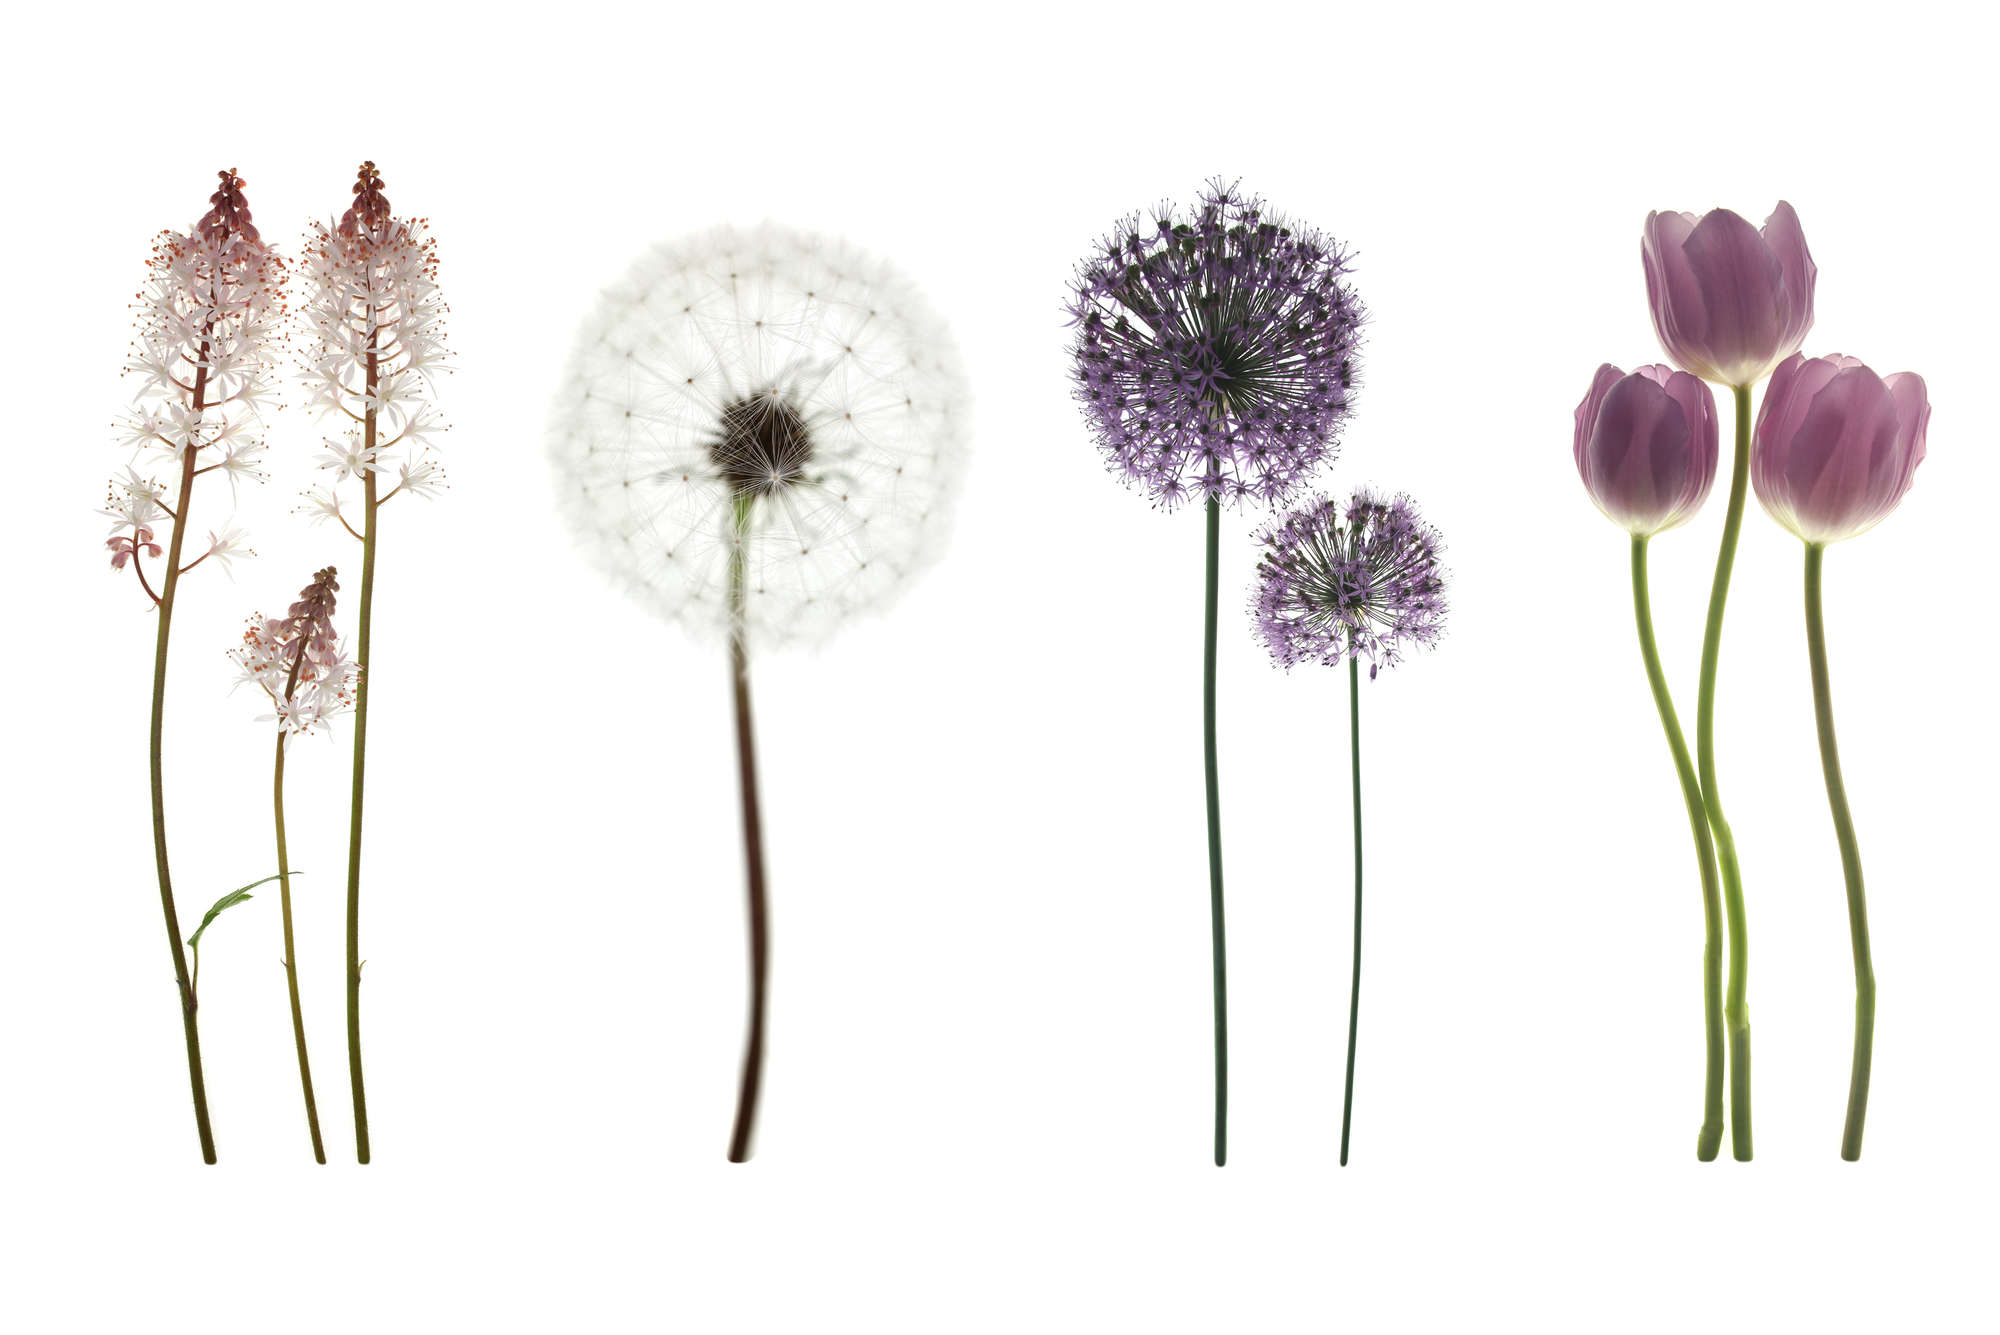             Fototapete mit Blumenvielfalt – Mattes Glattvlies
        